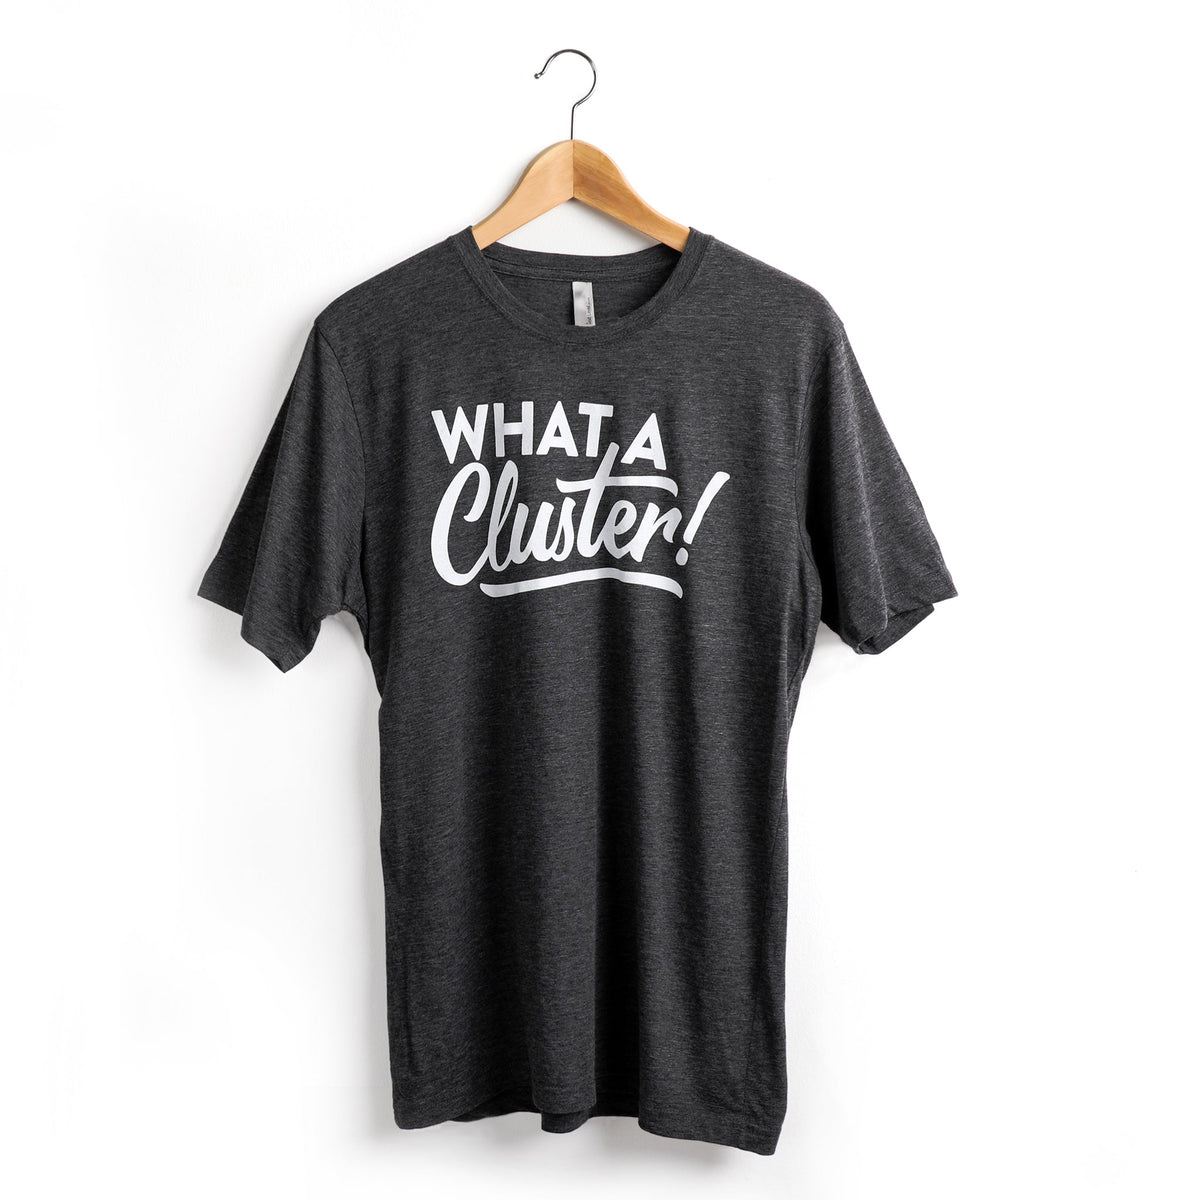 What a Cluster! T-shirt-Goo Goo Cluster